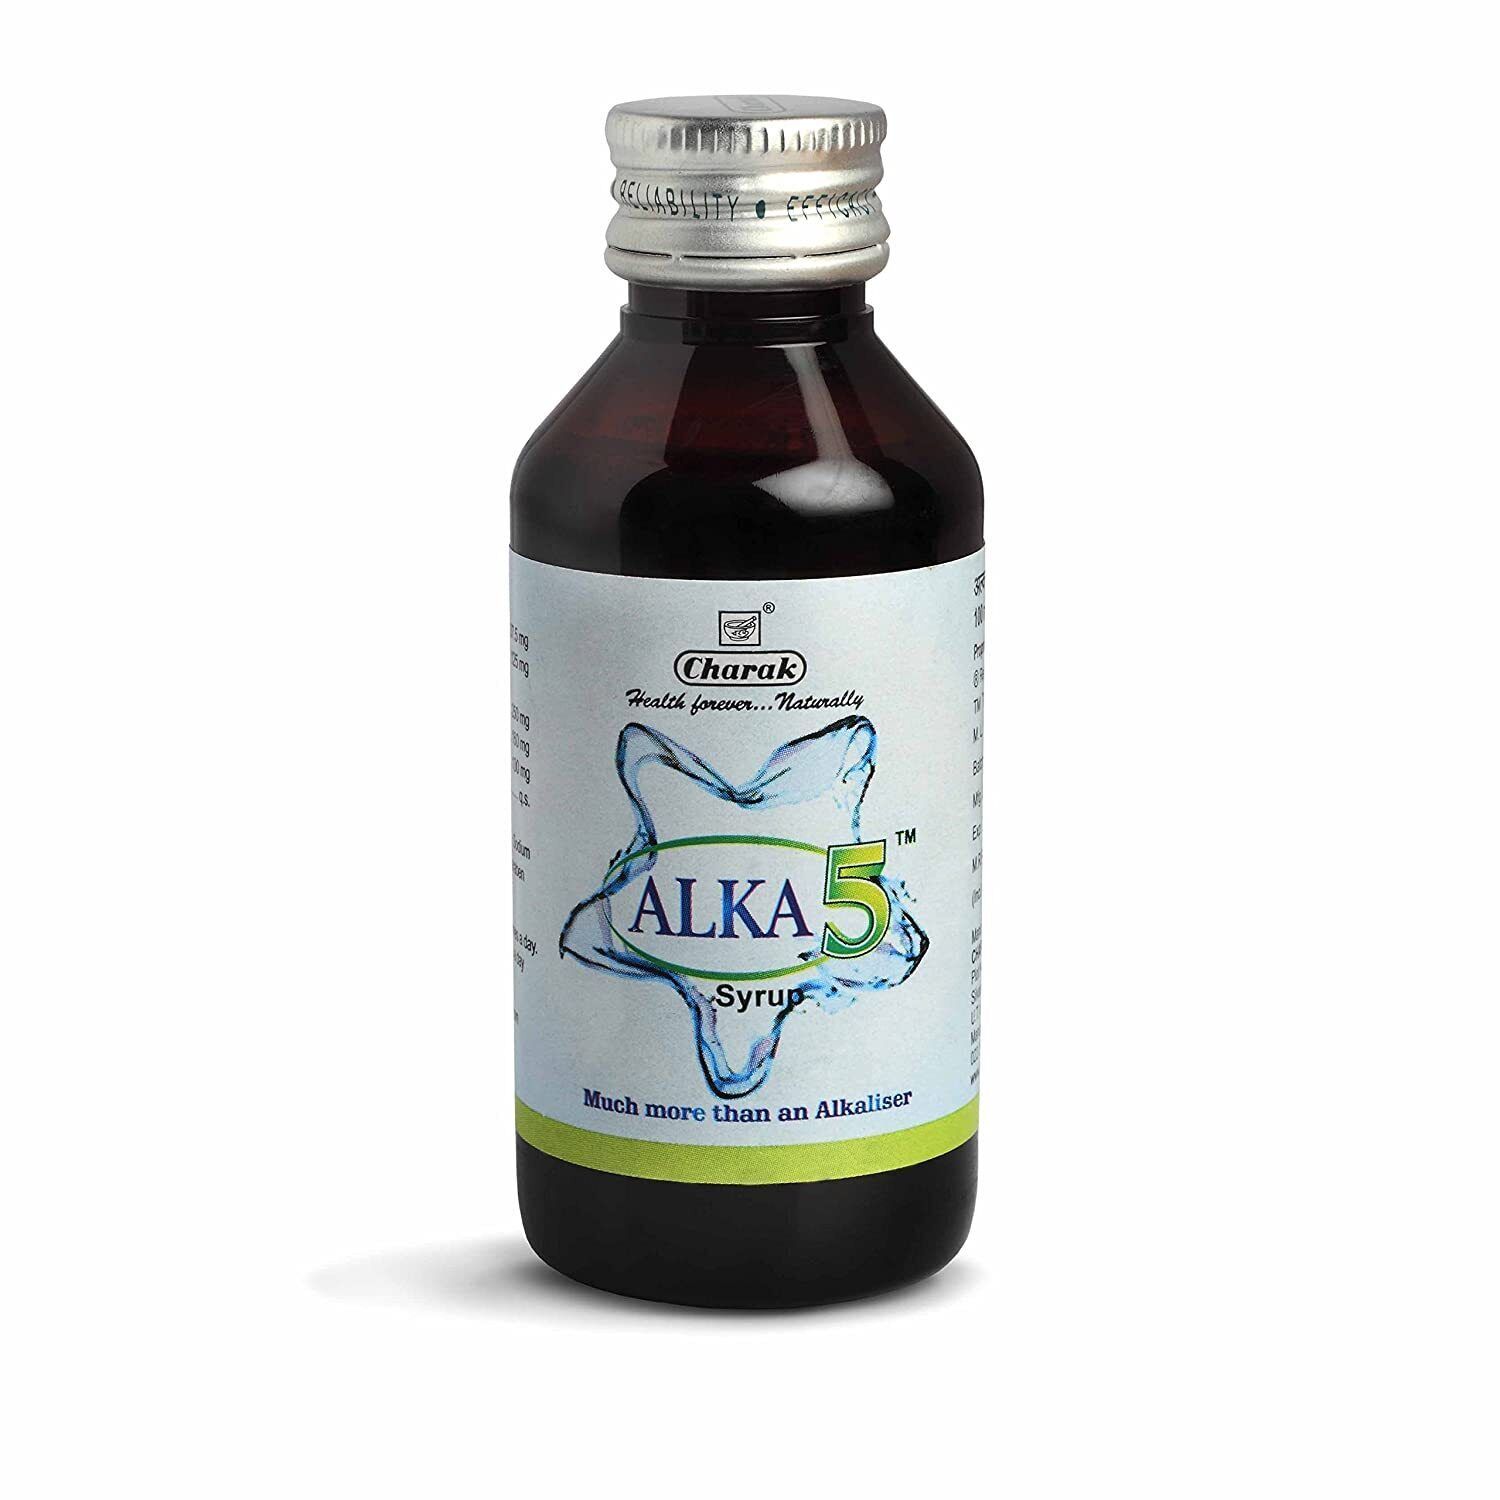 Charak Pharma Alka-5 Syrup for Burning Urine Sensation - 100ml (Pack of 1)